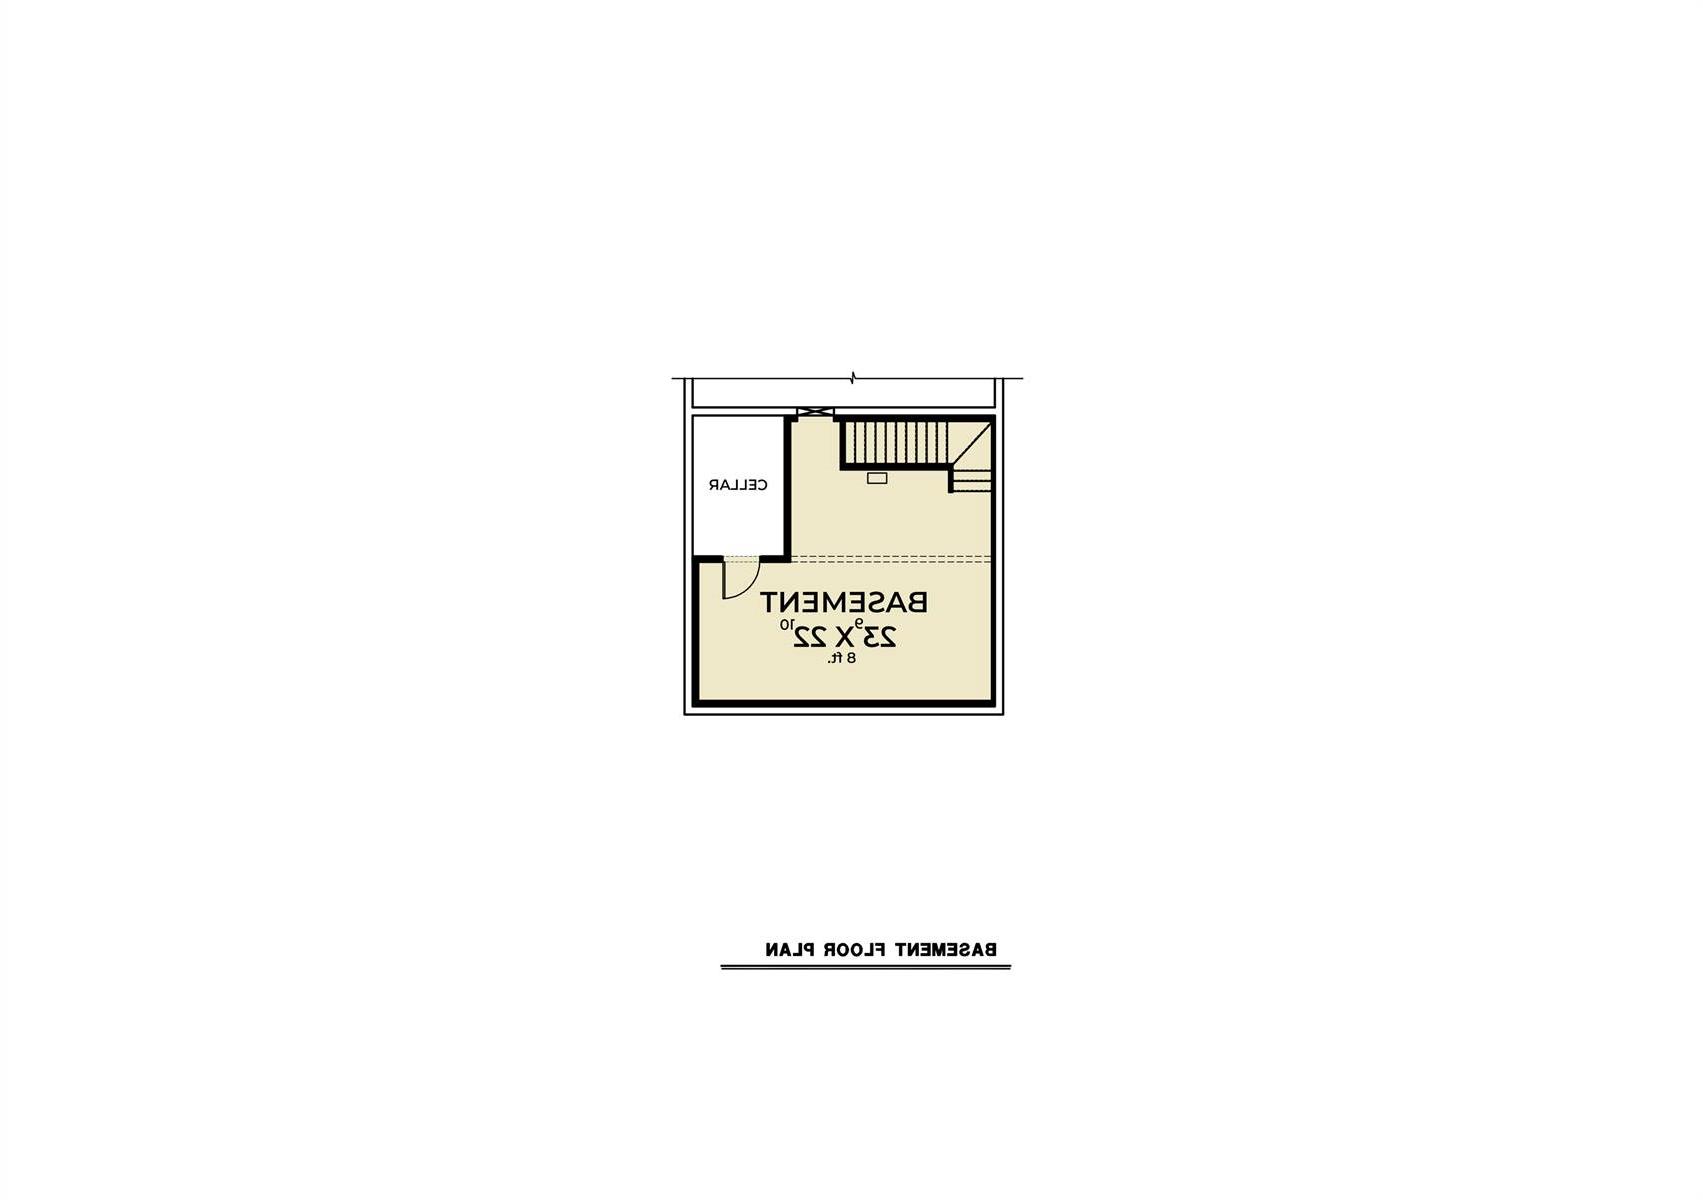 Basement Plan image of Northwest 628 House Plan